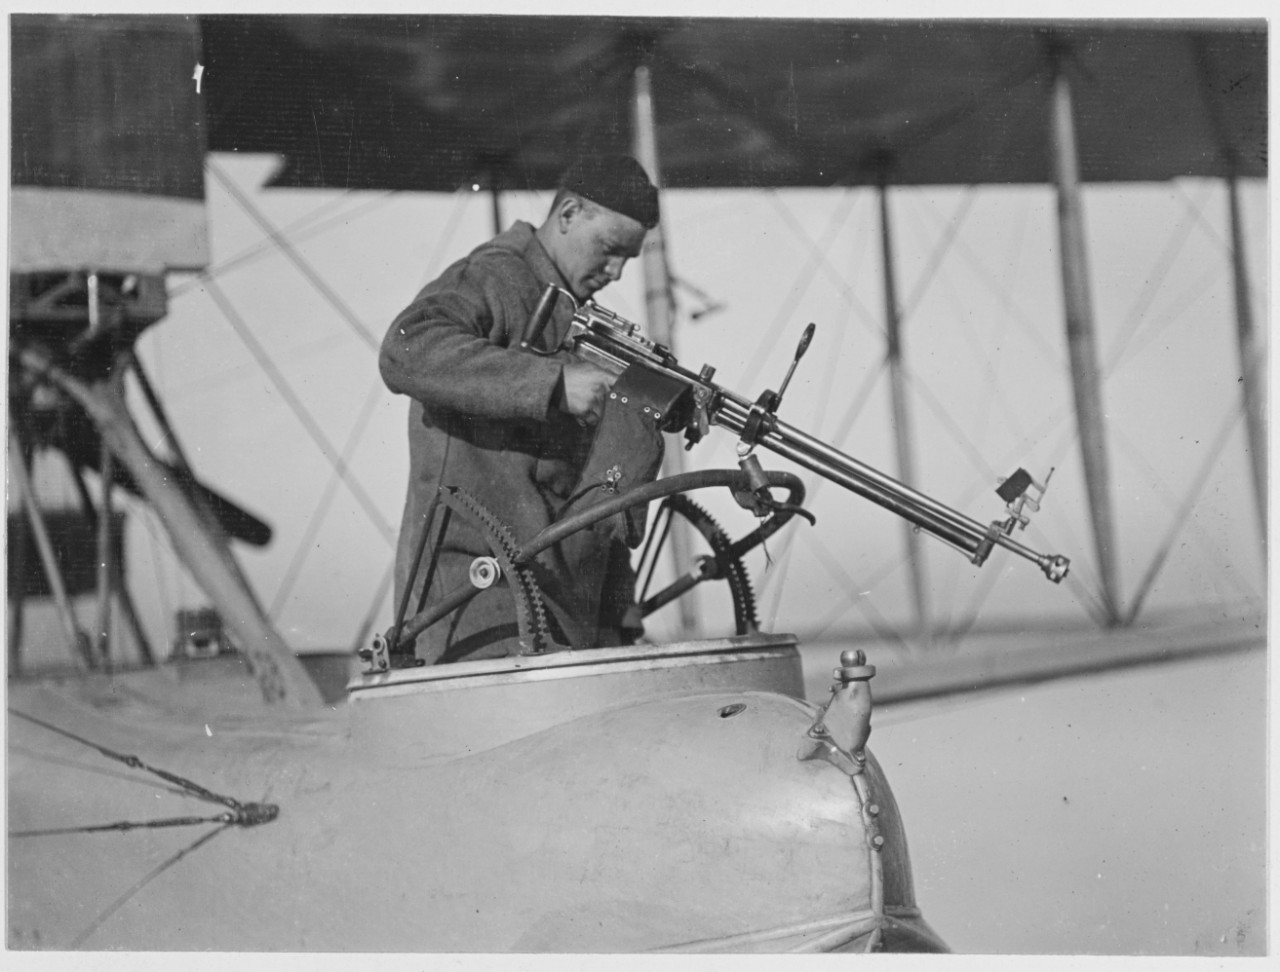 Preparing machine gun for gunnery prior to a flight. February 20, 1919